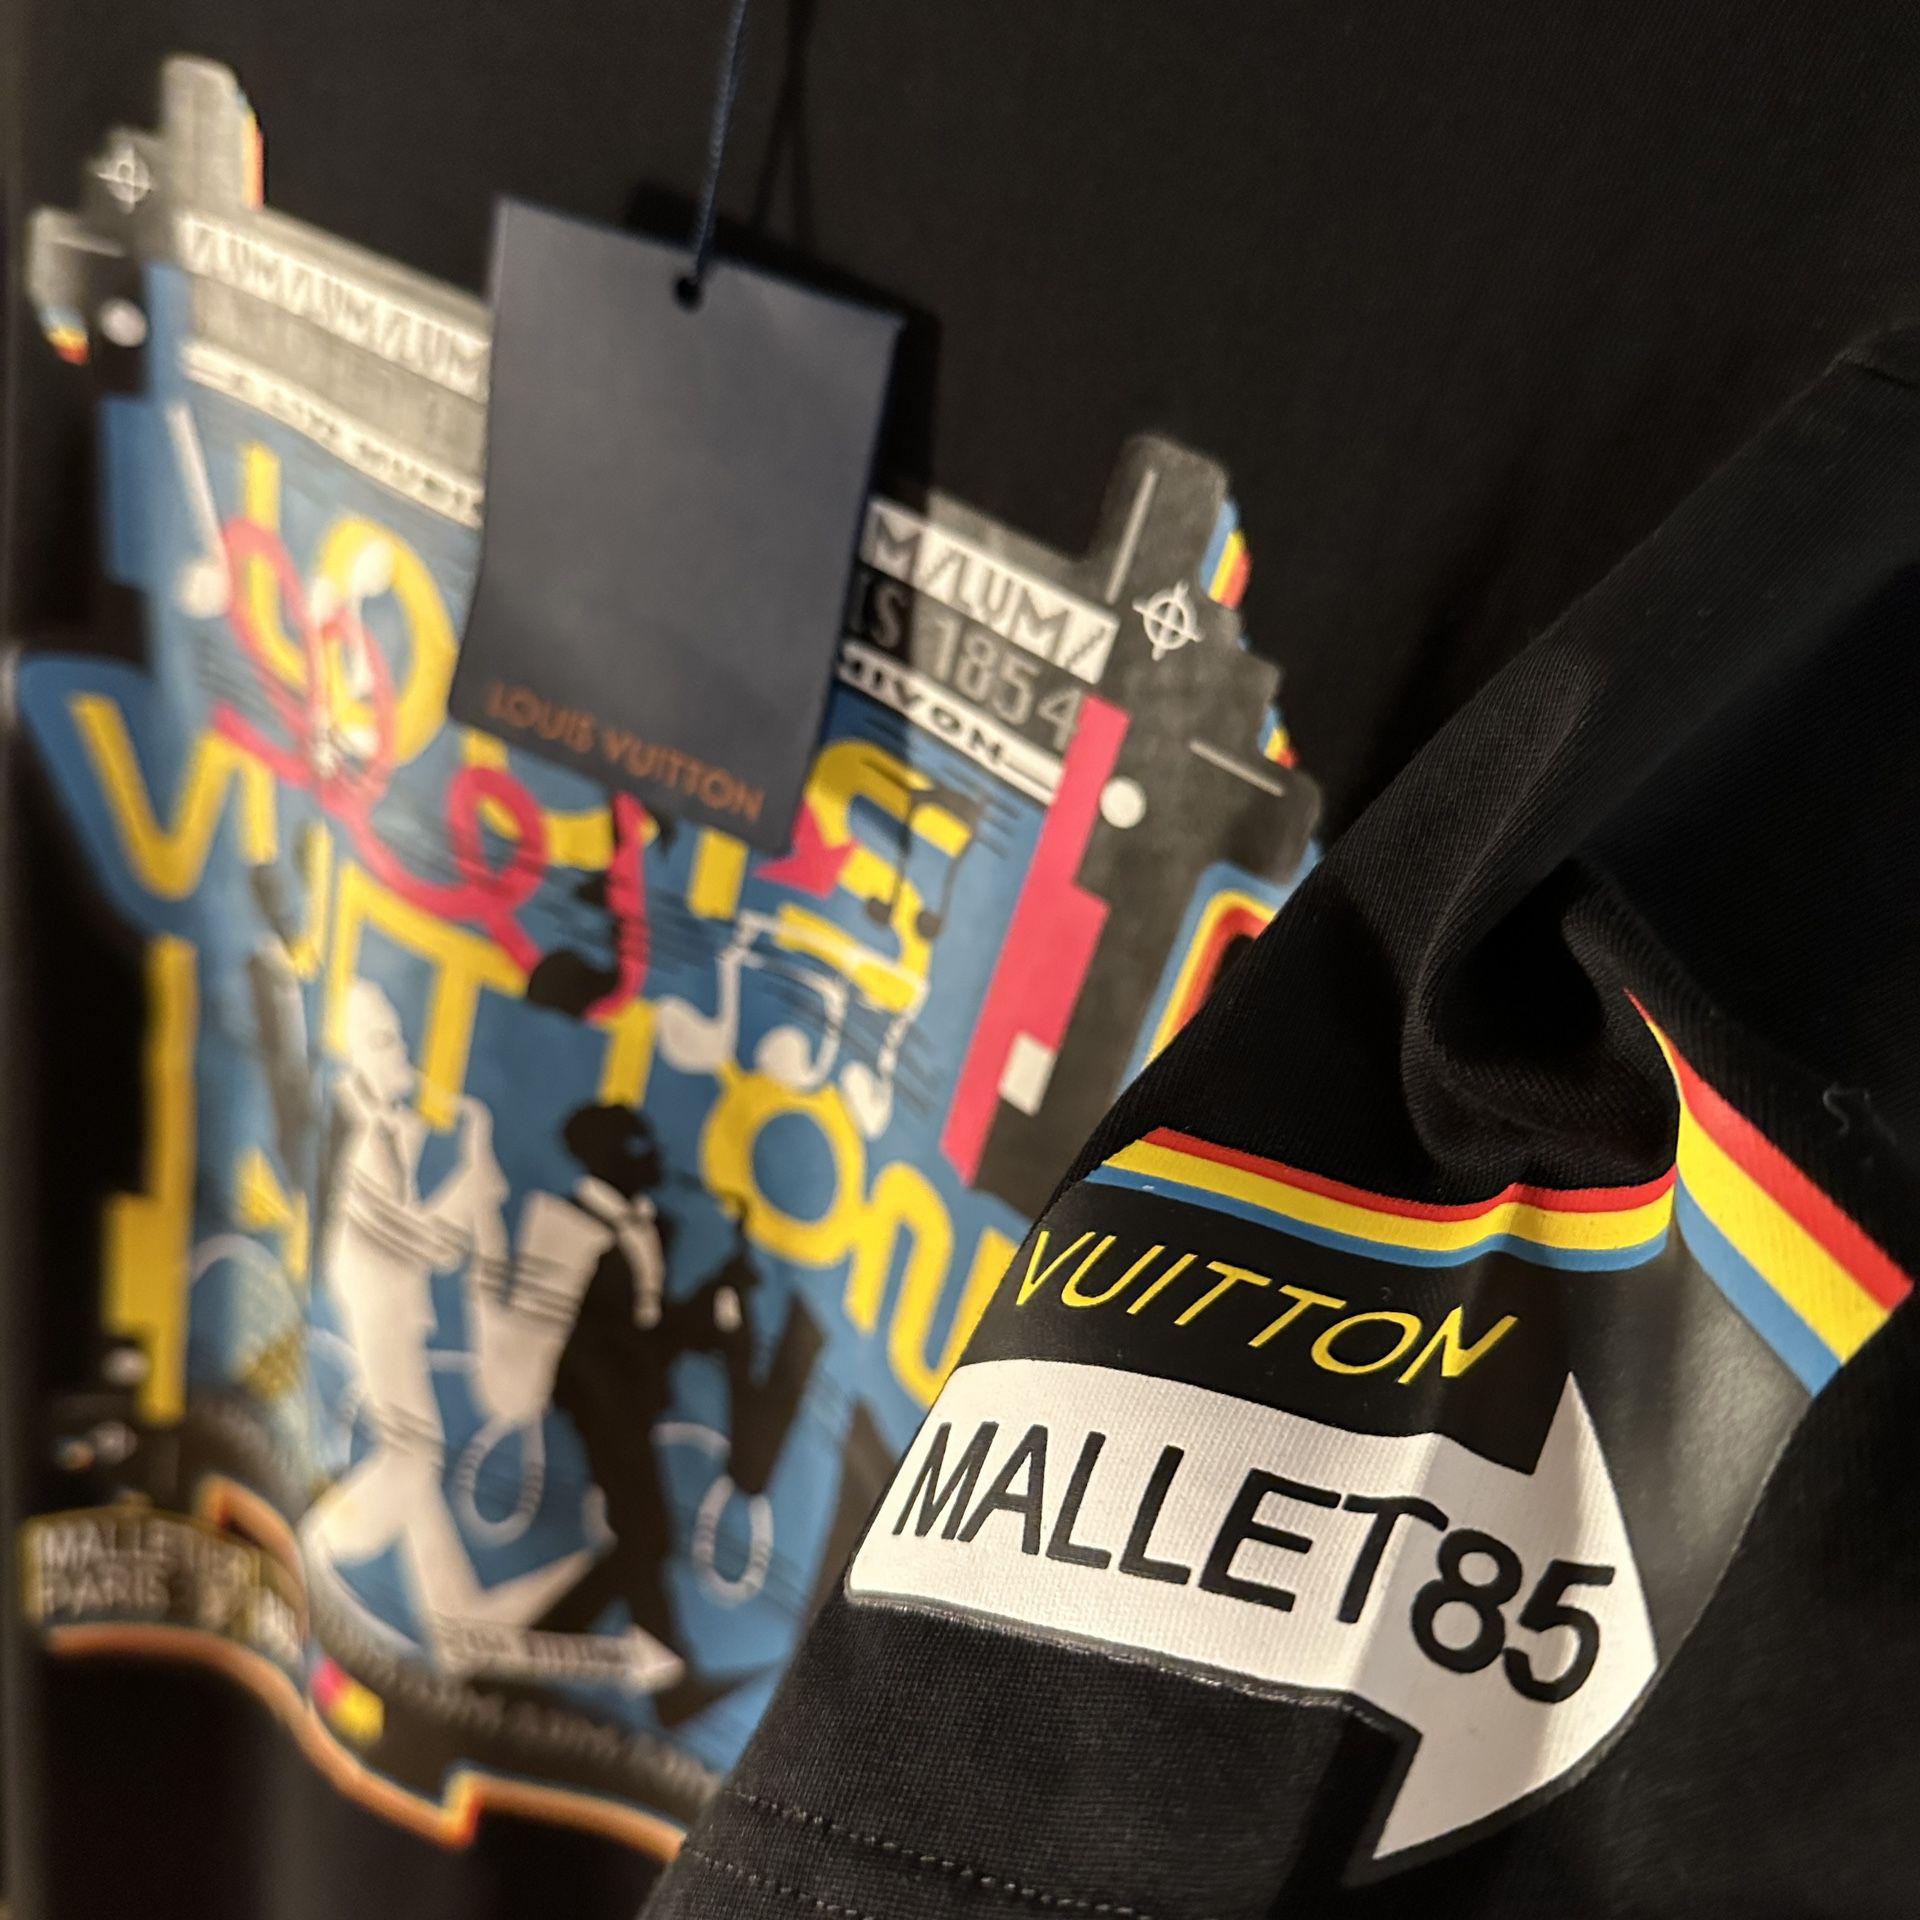 Men's Louis Vuitton T-shirt Jazz Flyers size L for Sale in West Palm Beach,  FL - OfferUp